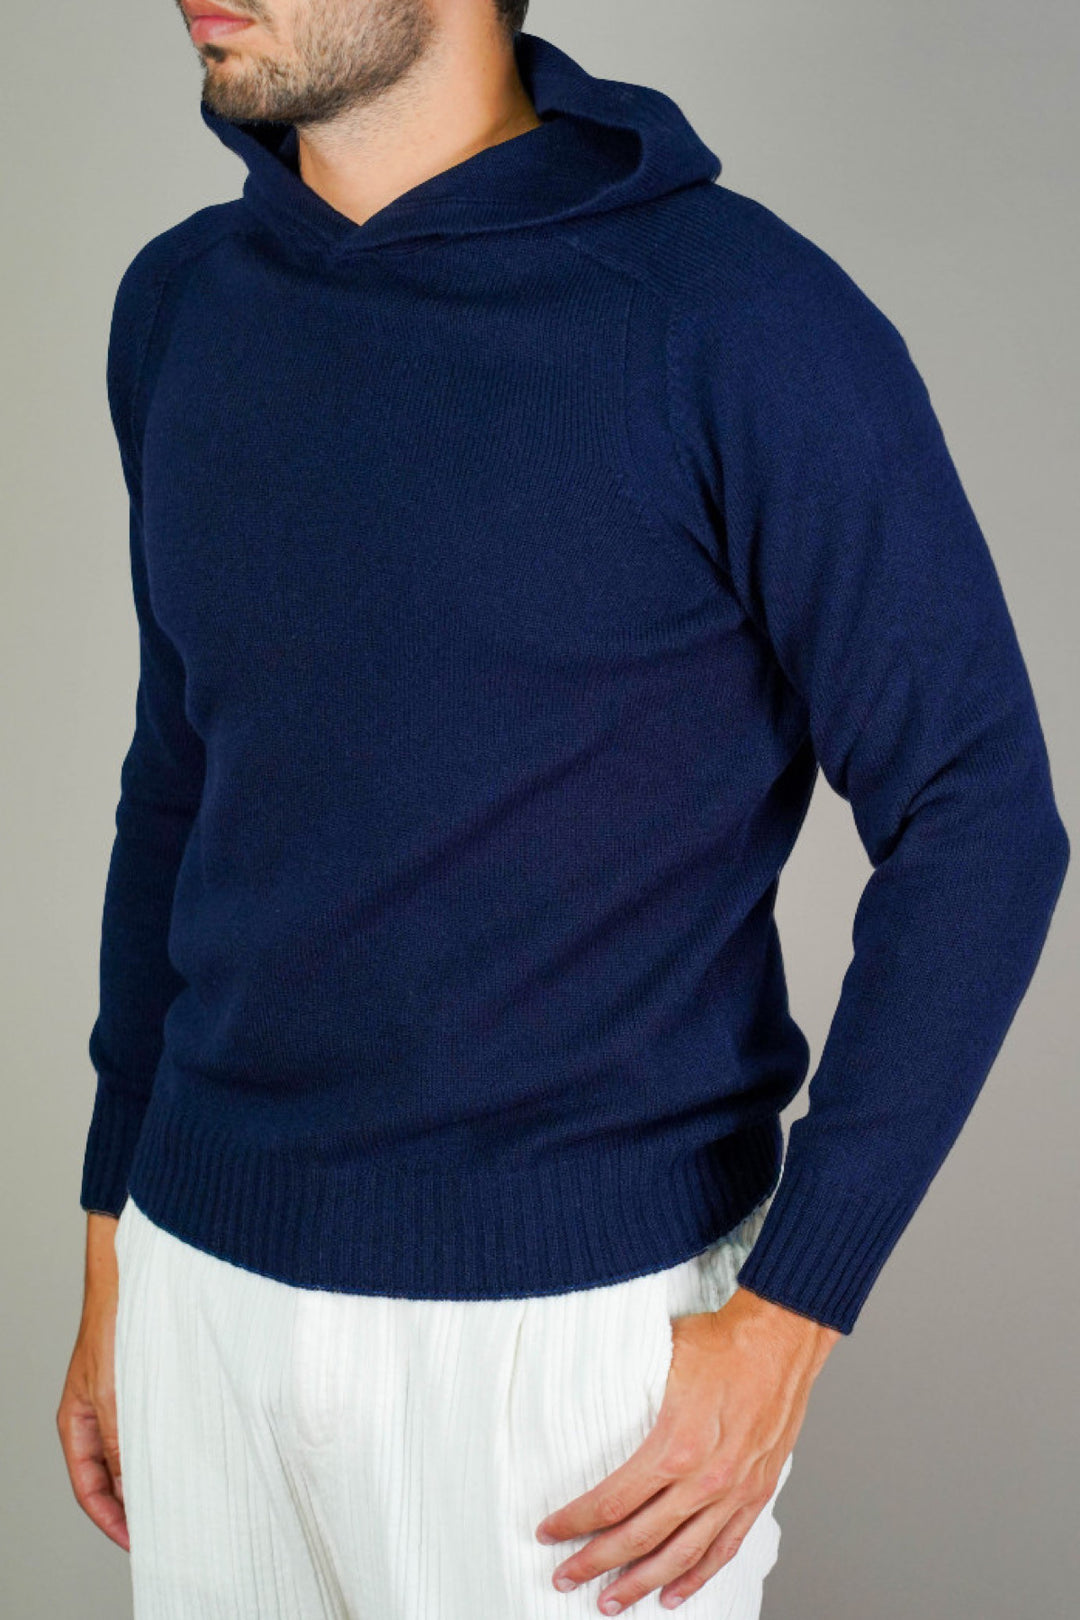 Wool hooded sweater